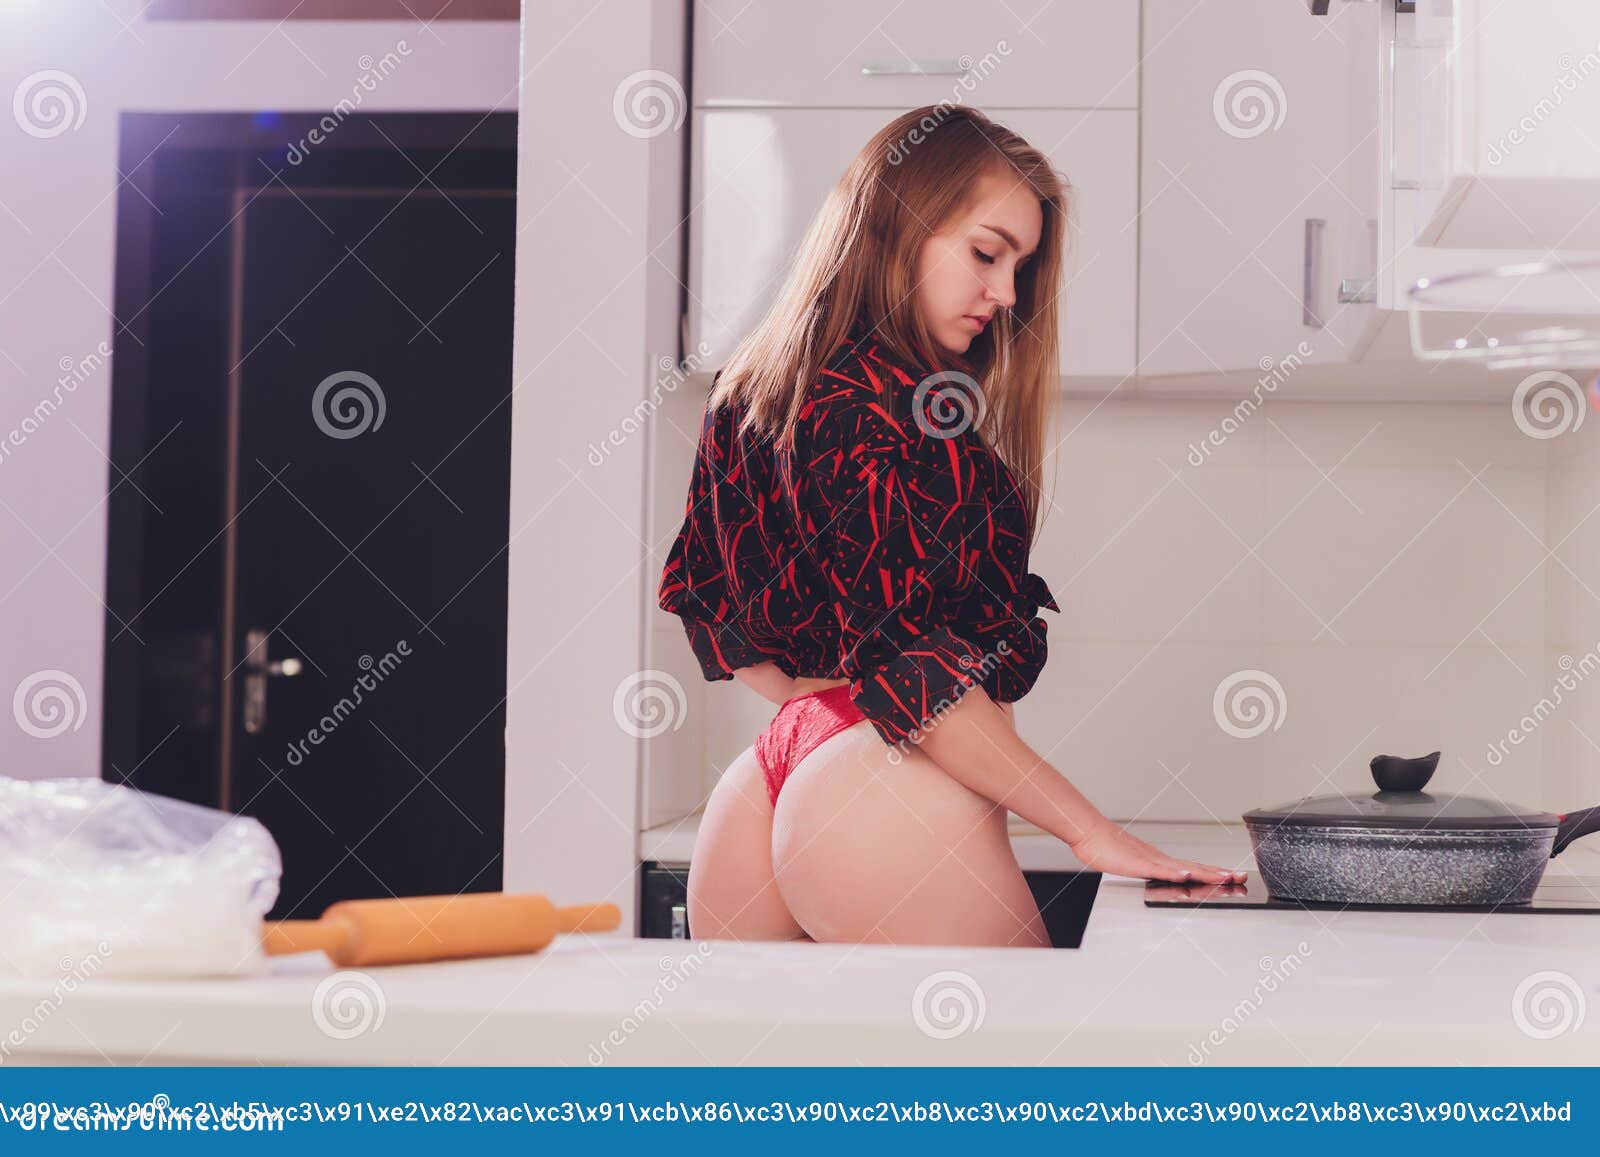 naked girl in kitchen